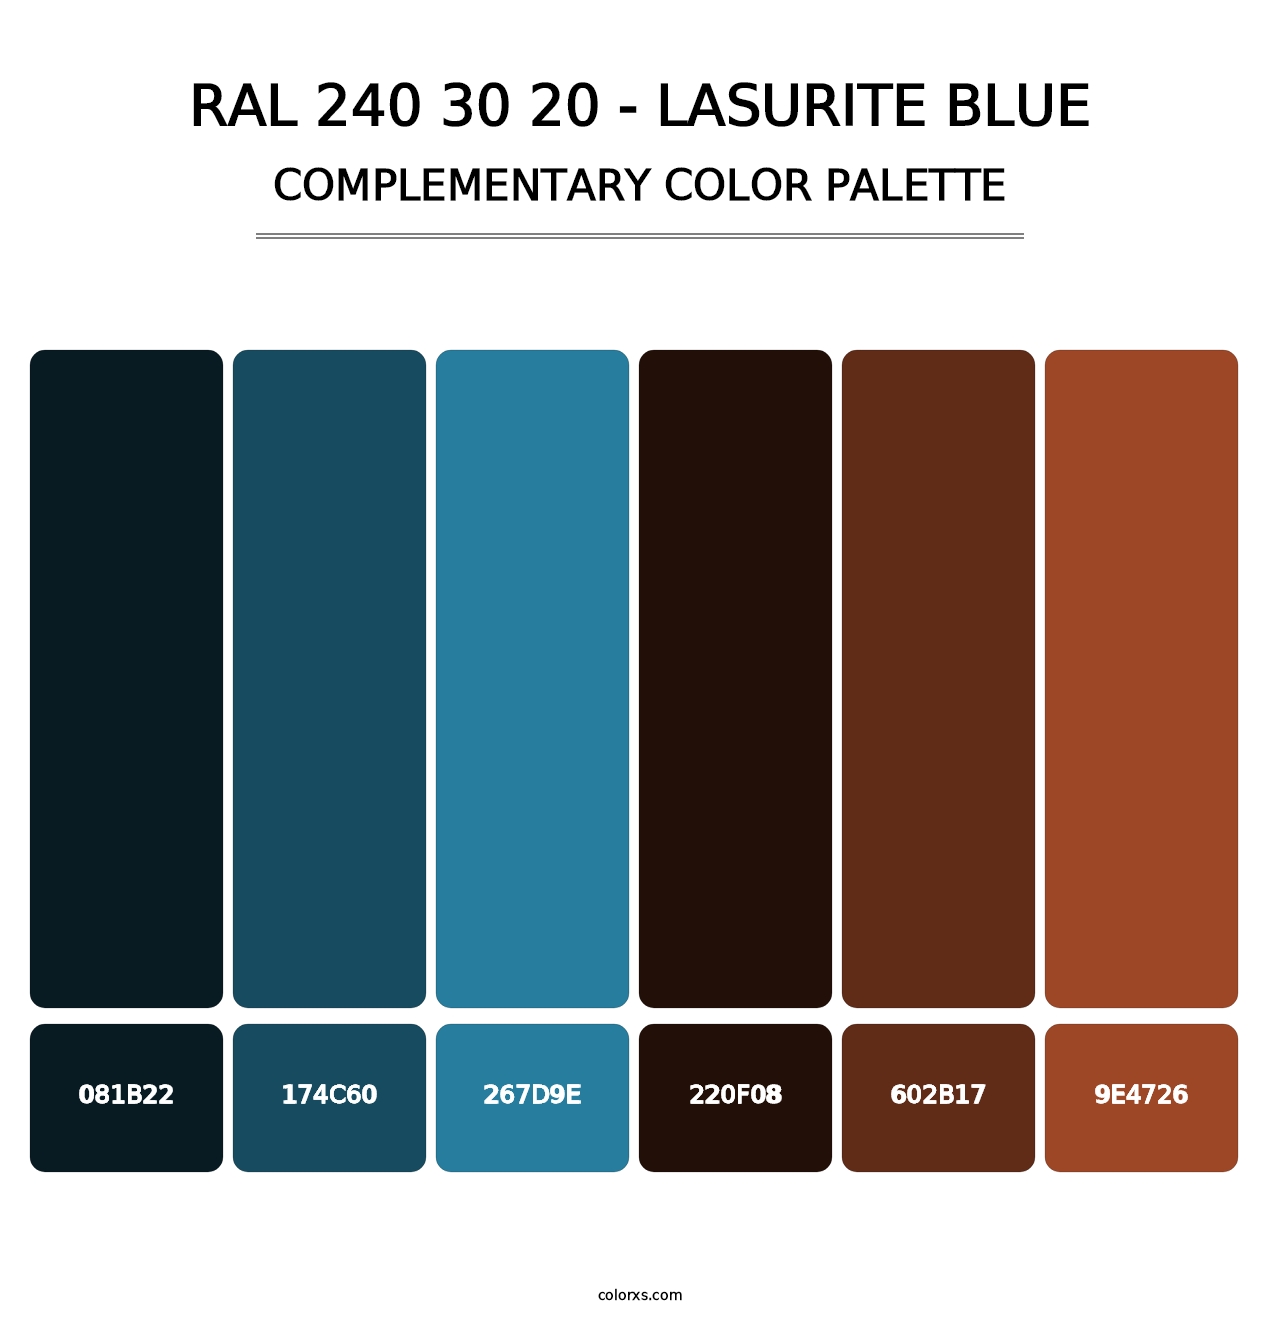 RAL 240 30 20 - Lasurite Blue - Complementary Color Palette